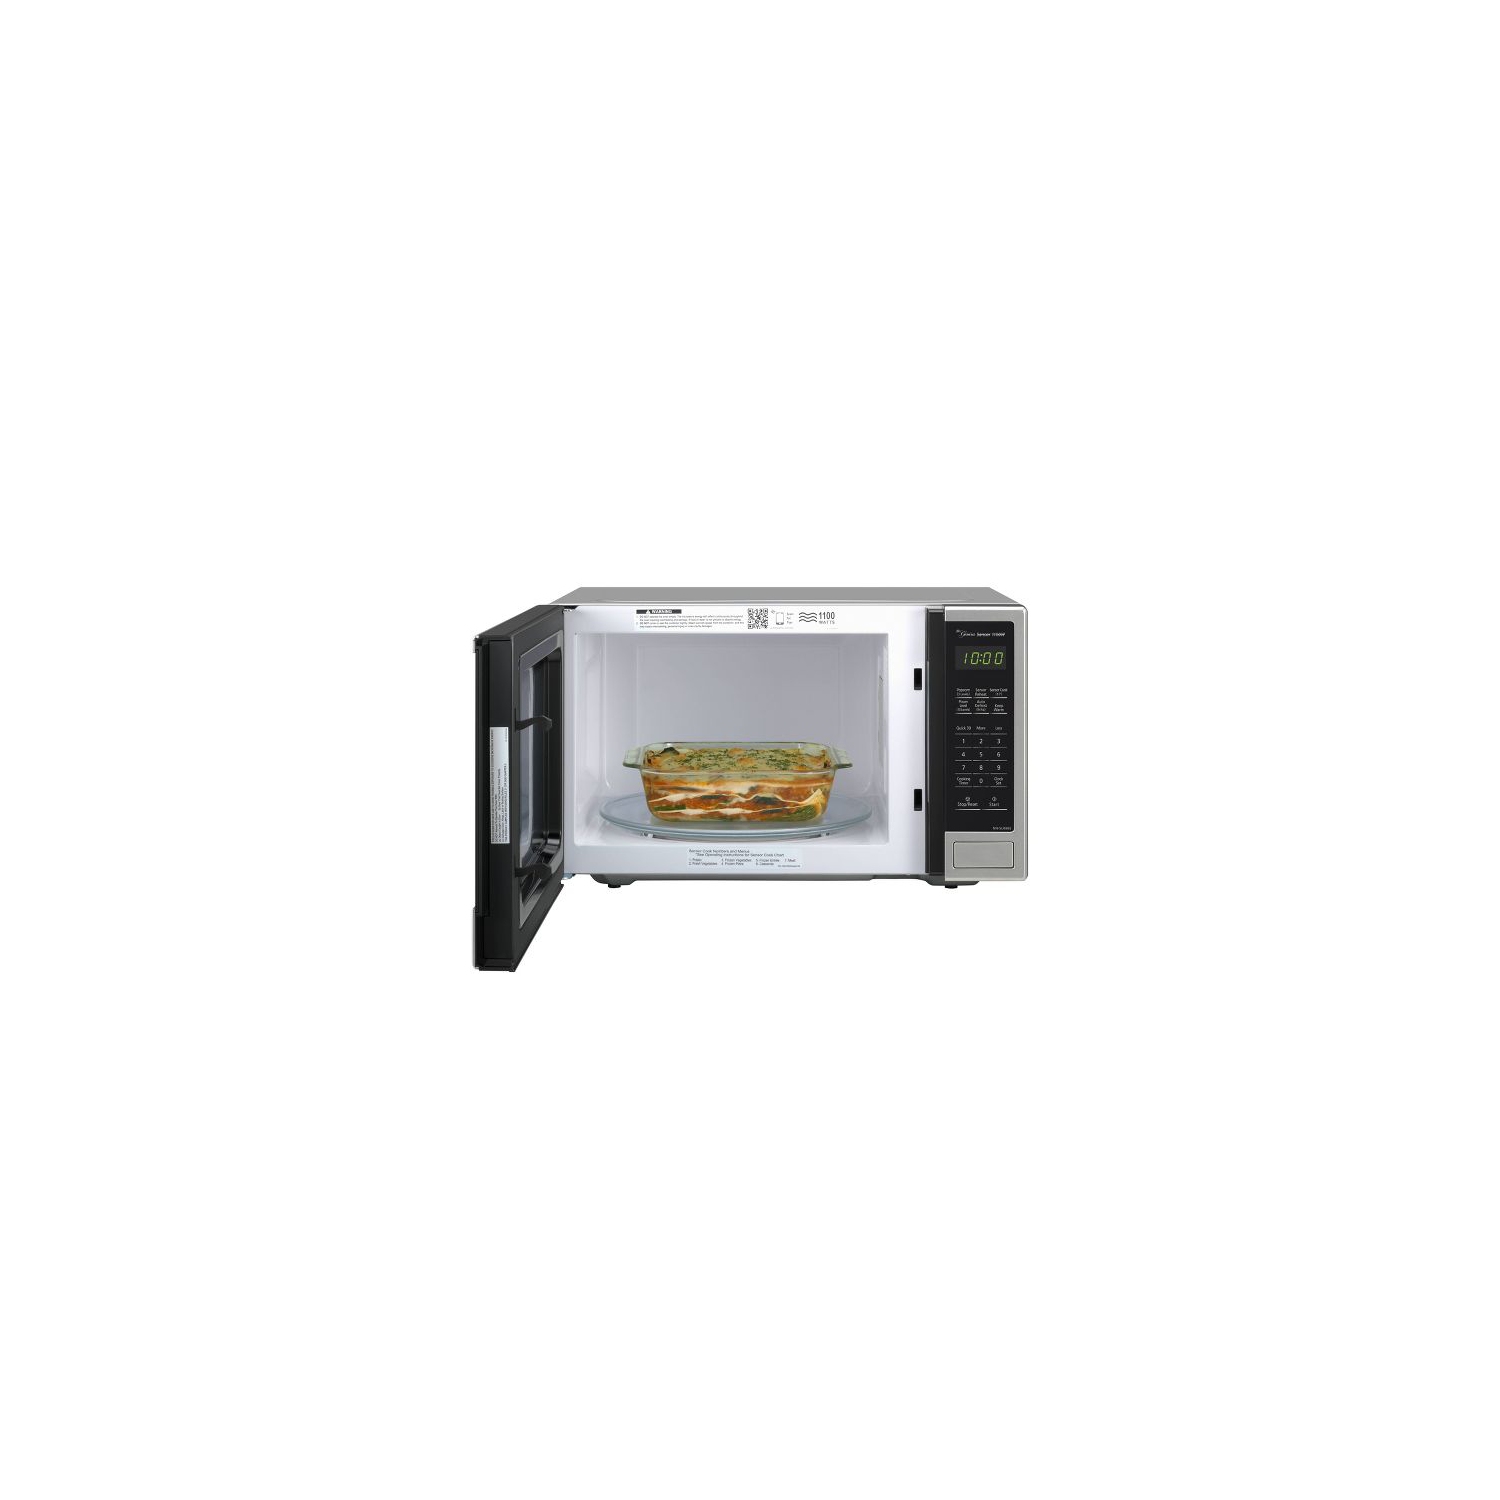 Panasonic 1.2 Inverter Microwave - Stainless Steel NN-SN67HS